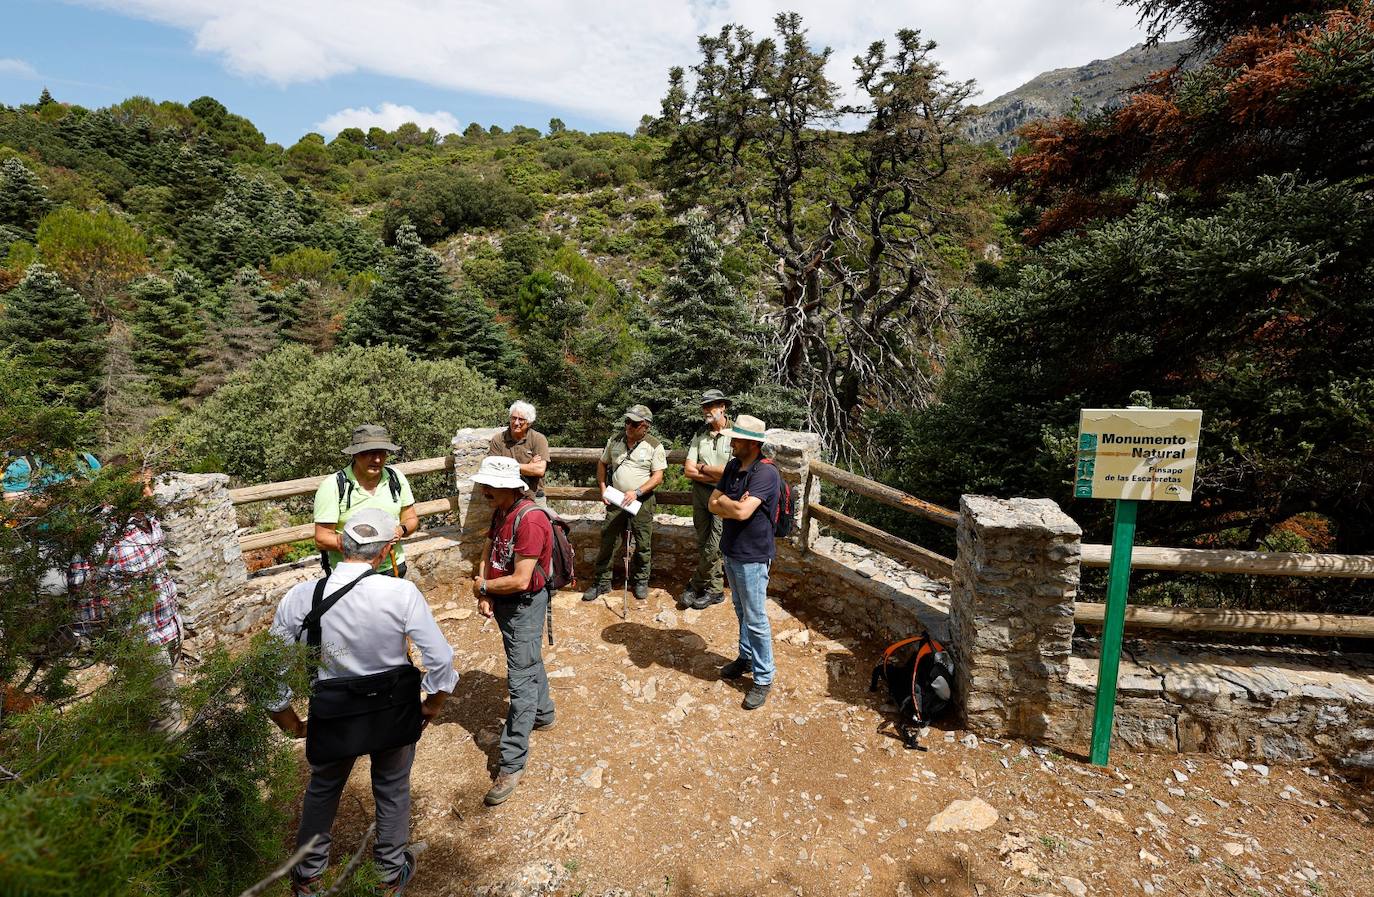 Drought and survival in the Sierra de las Nieves